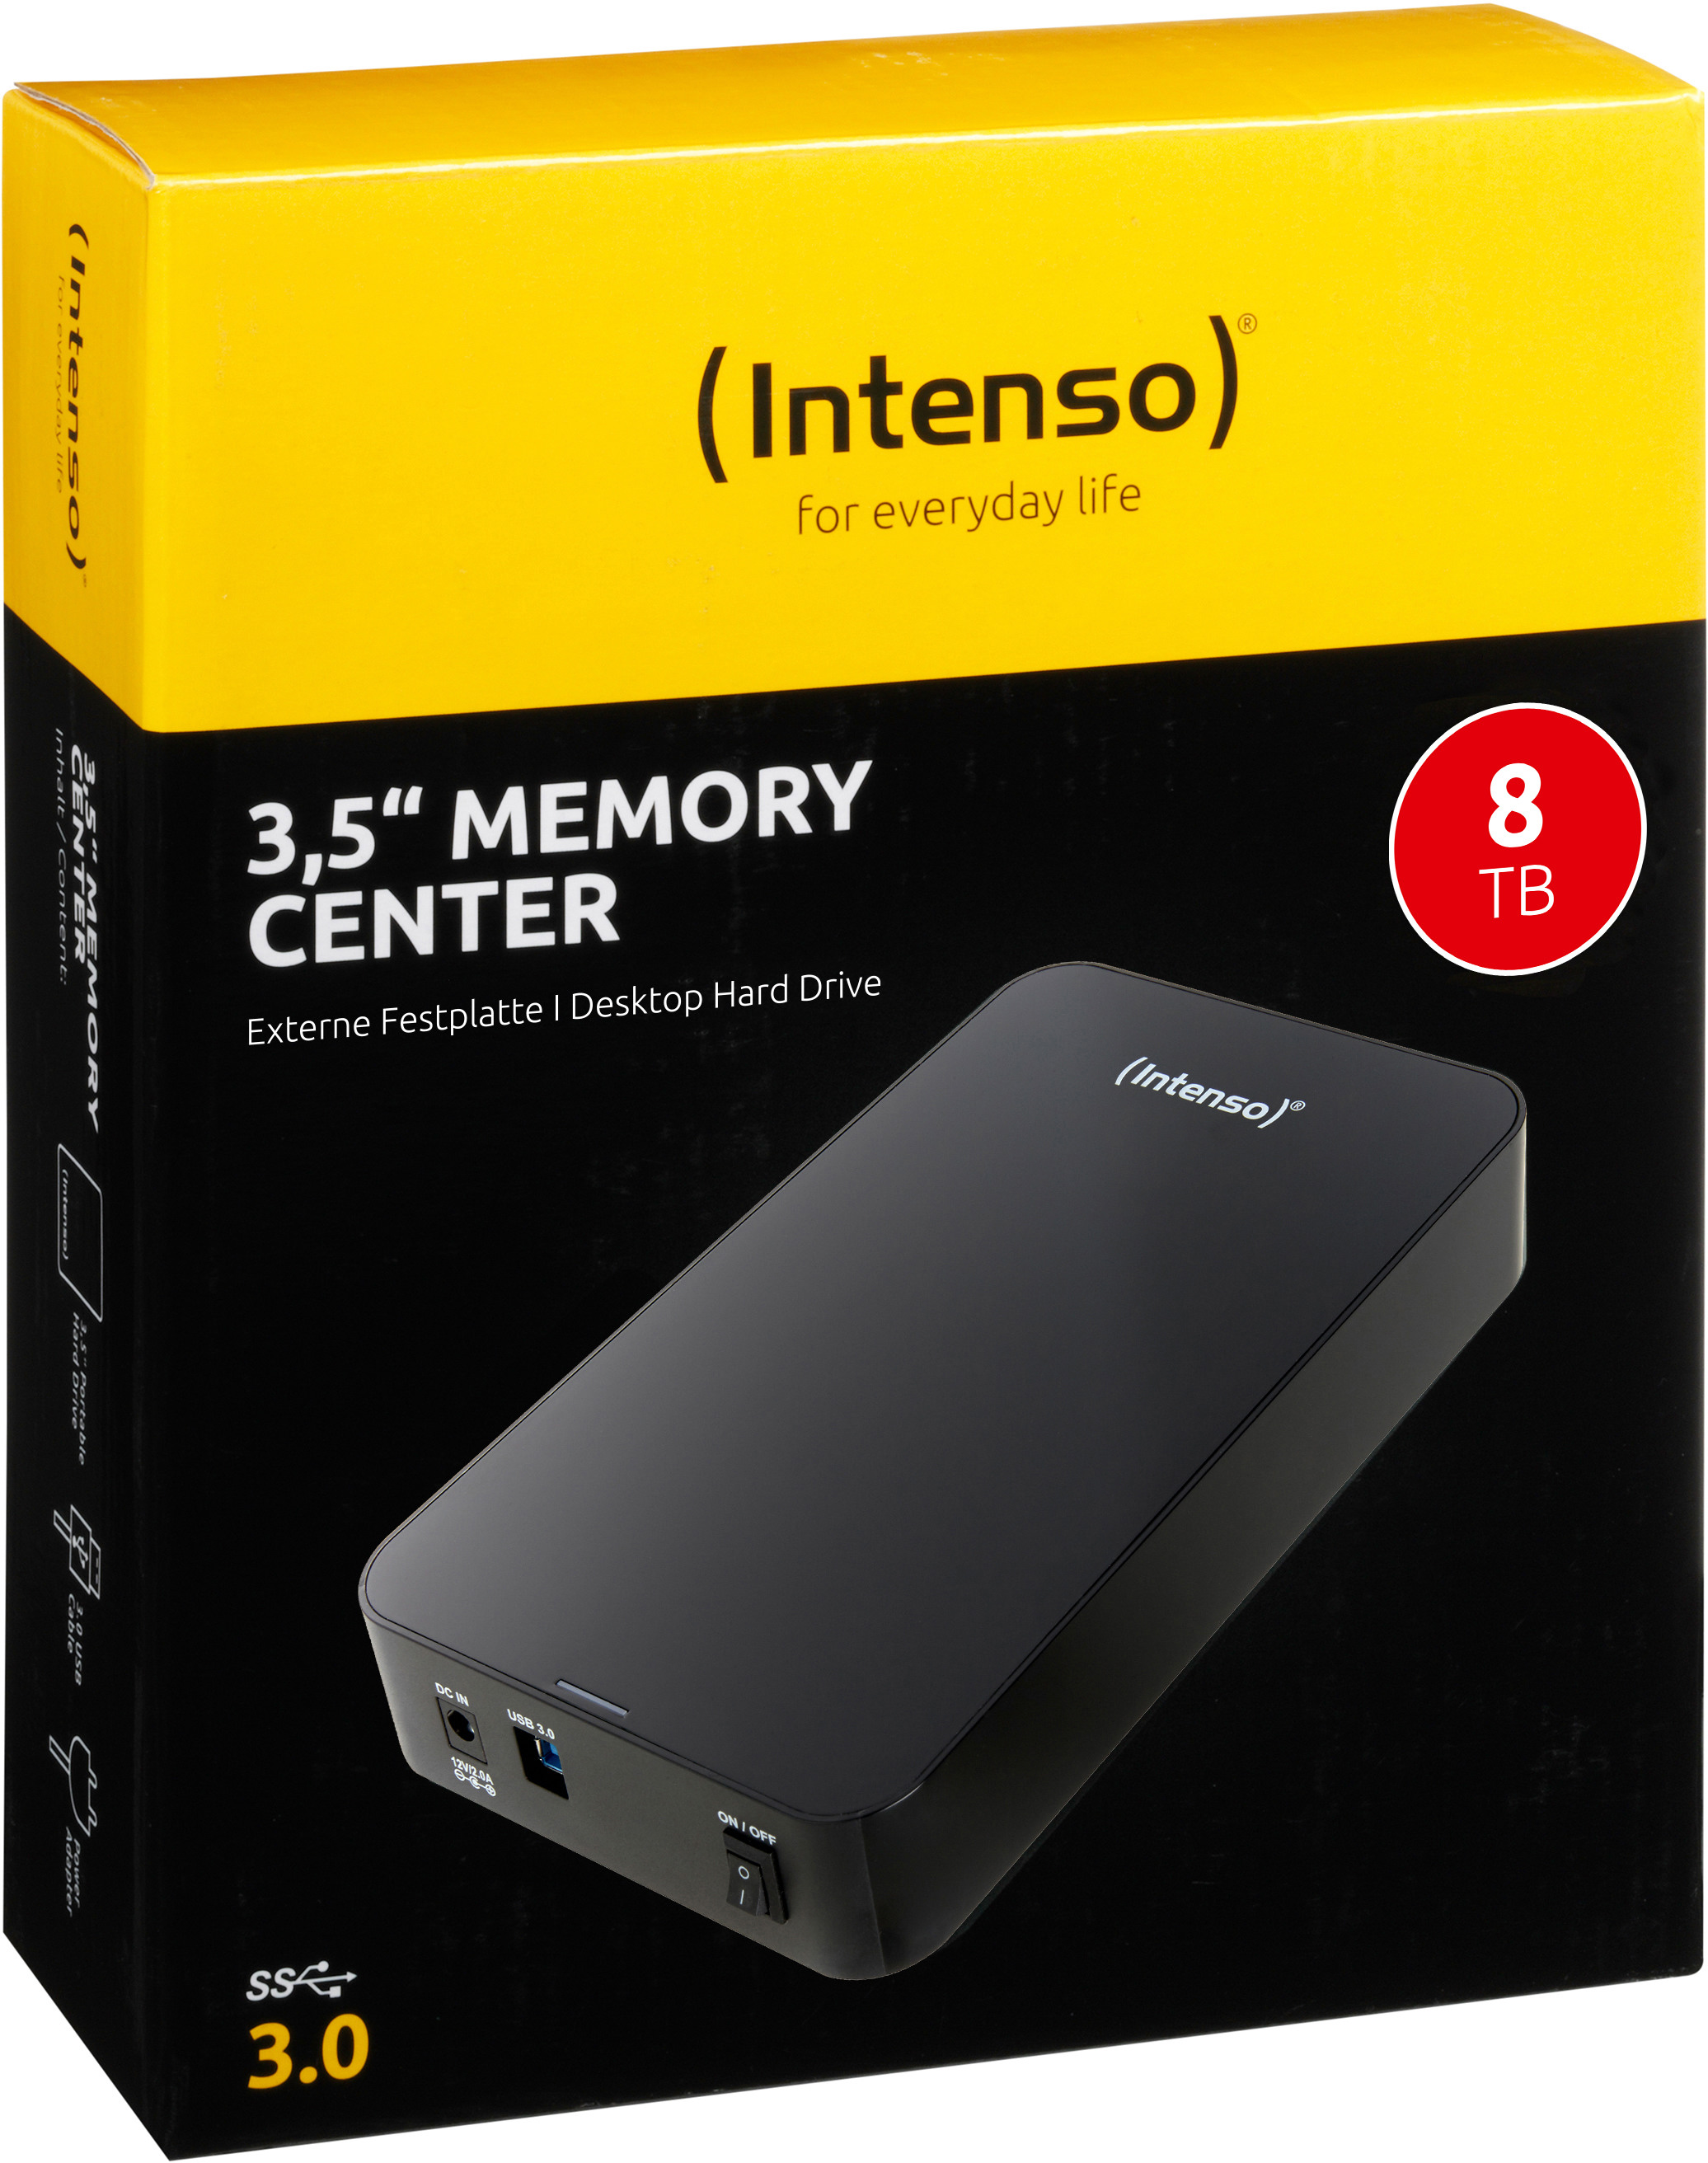 INTENSO HDD Memory Center 8TB 6031516 3.5 inch